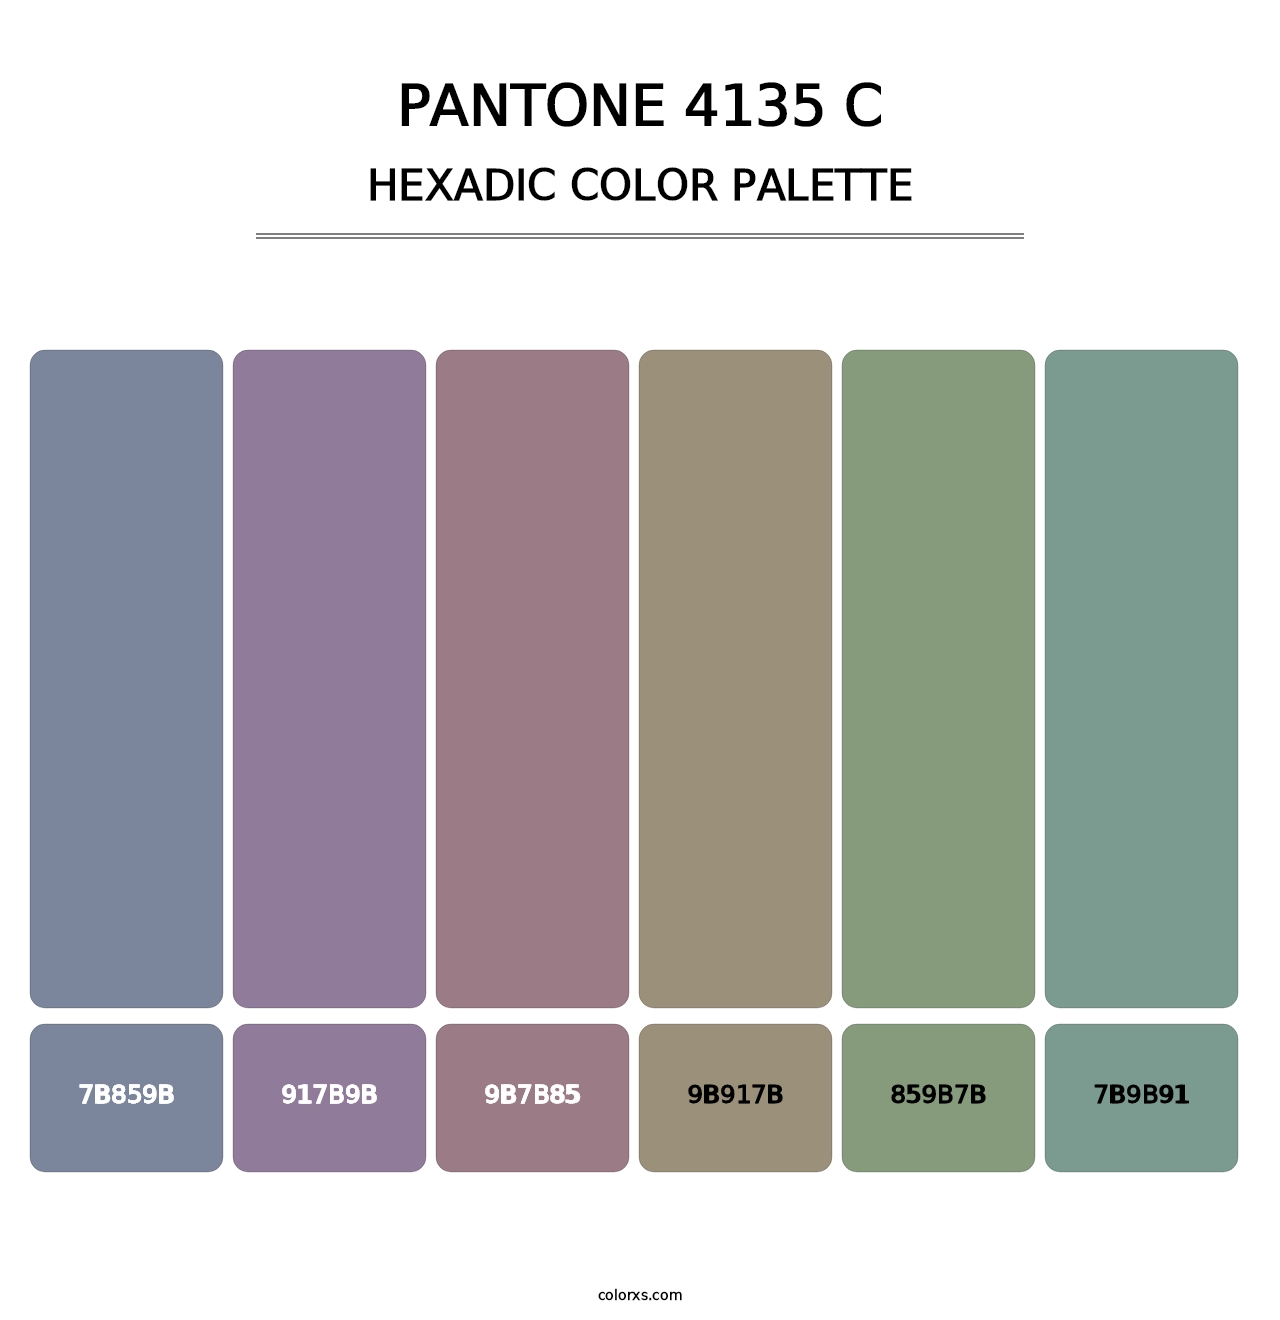 PANTONE 4135 C - Hexadic Color Palette